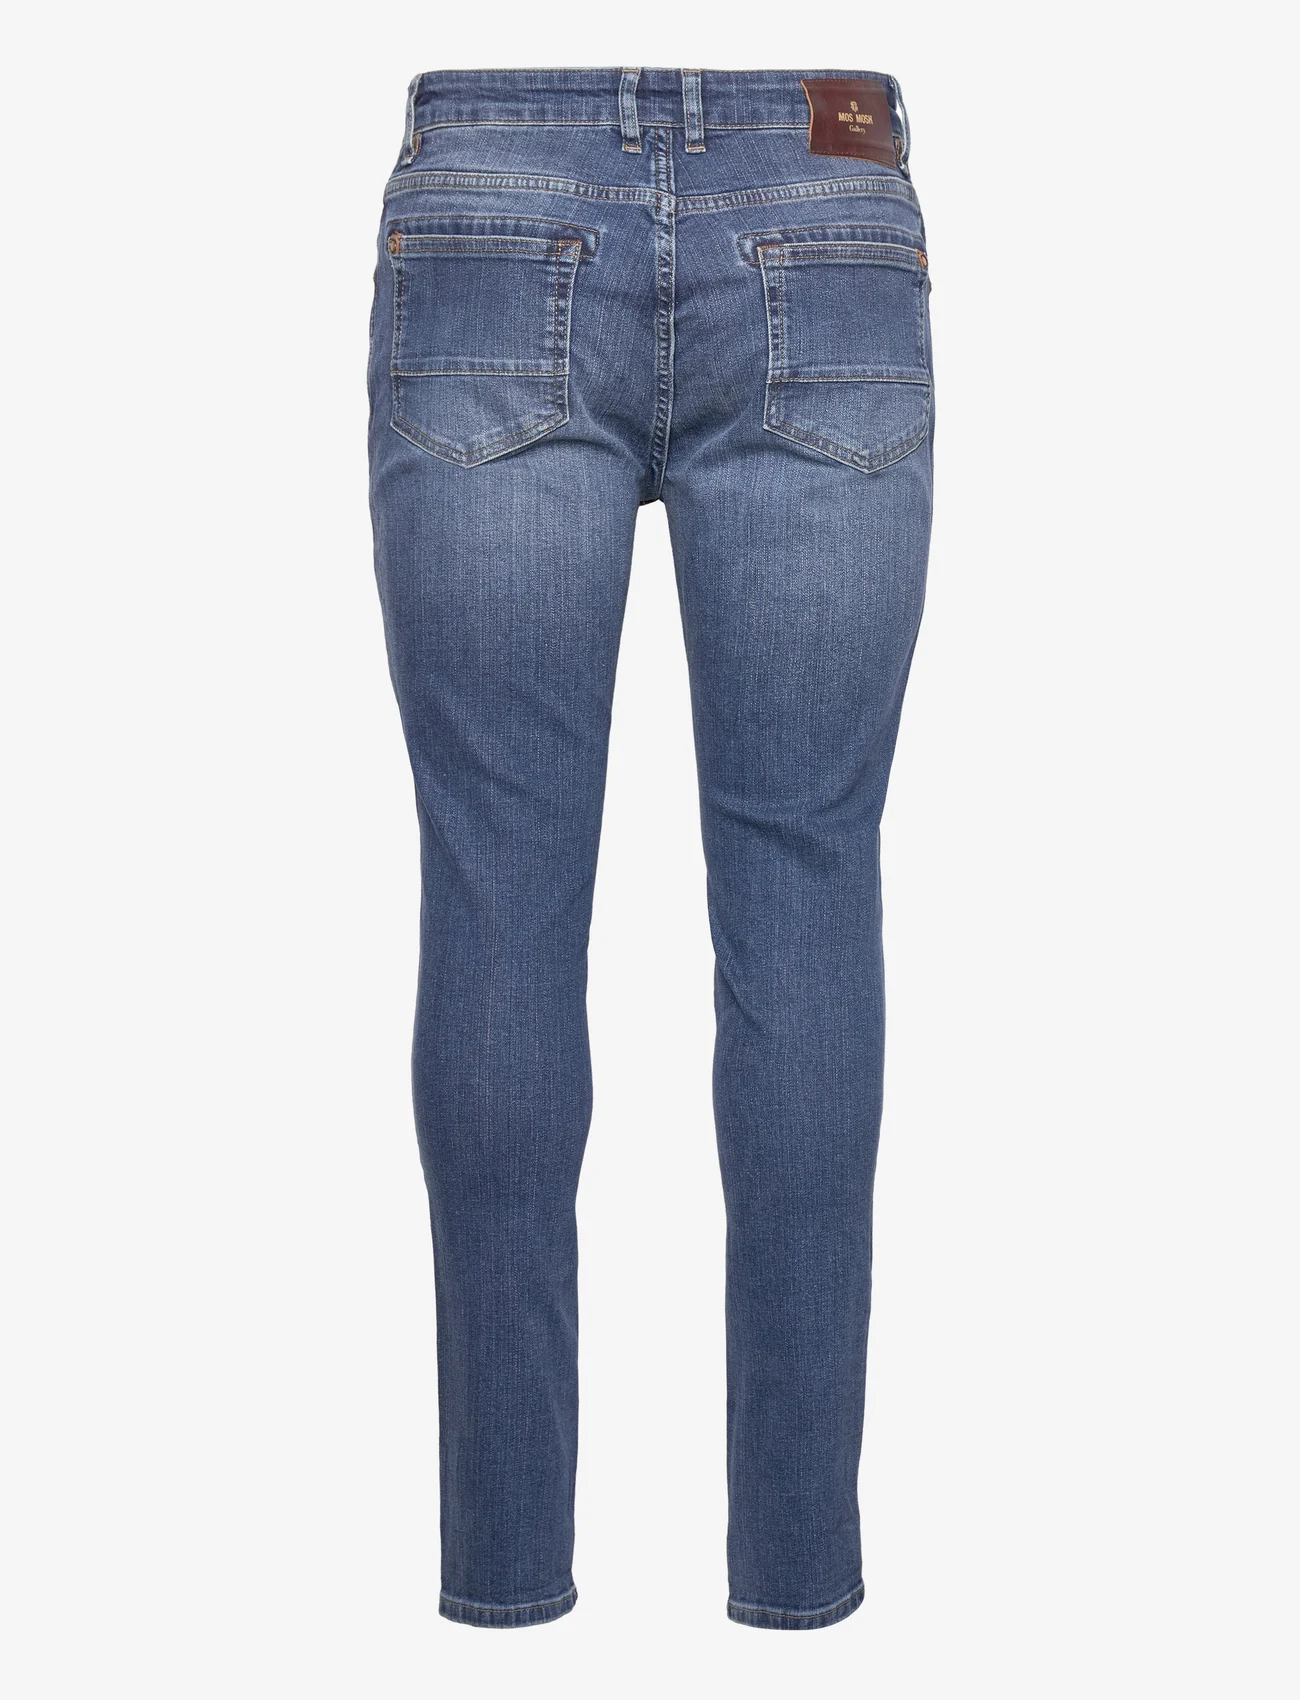 Mos Mosh Gallery - MMGPortman Perugia Jeans - skinny jeans - blue denim - 1